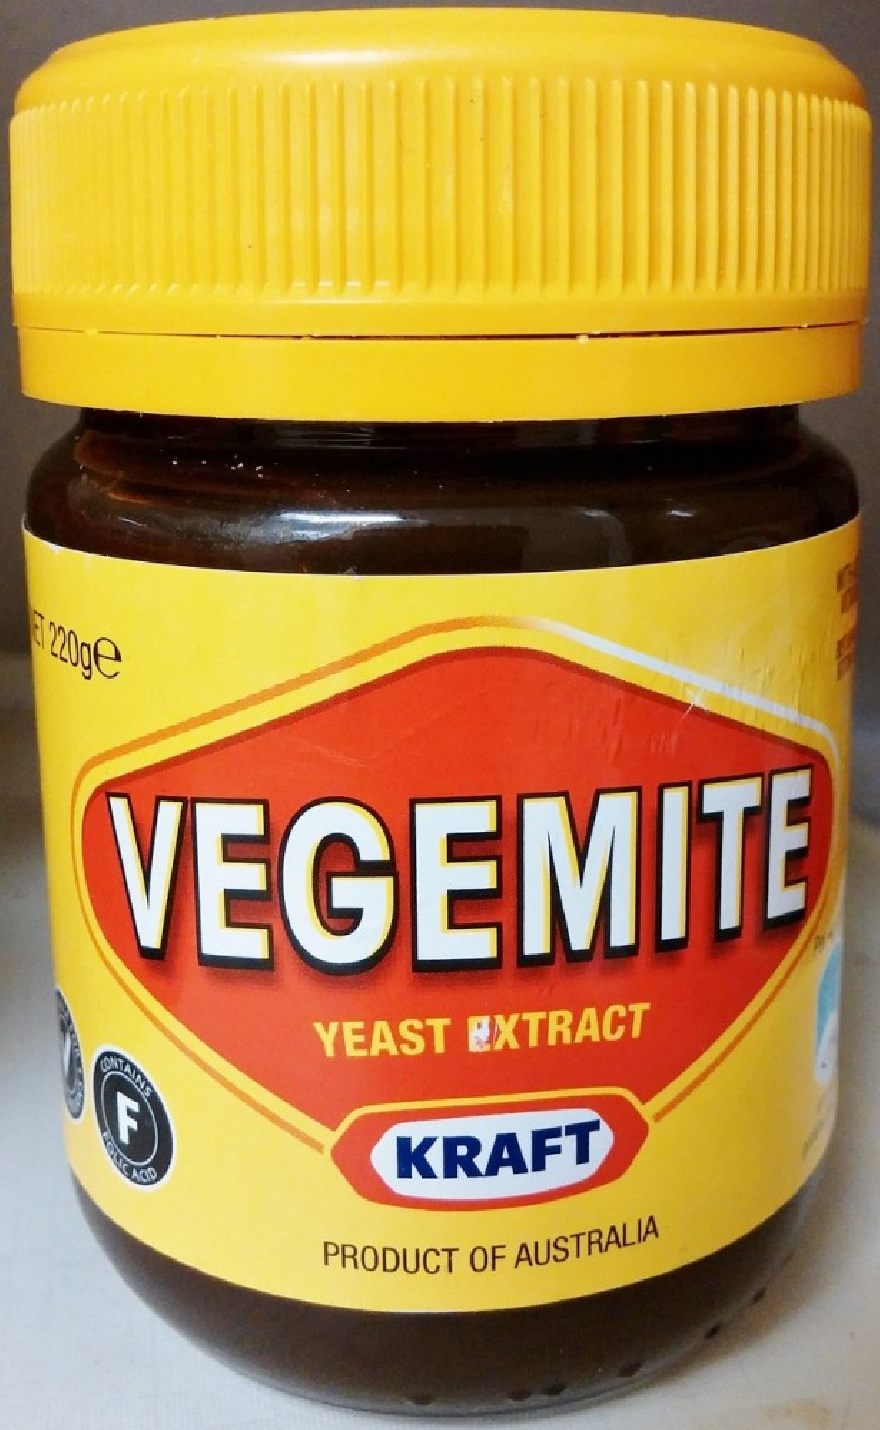 Origin Australian Vegemite.